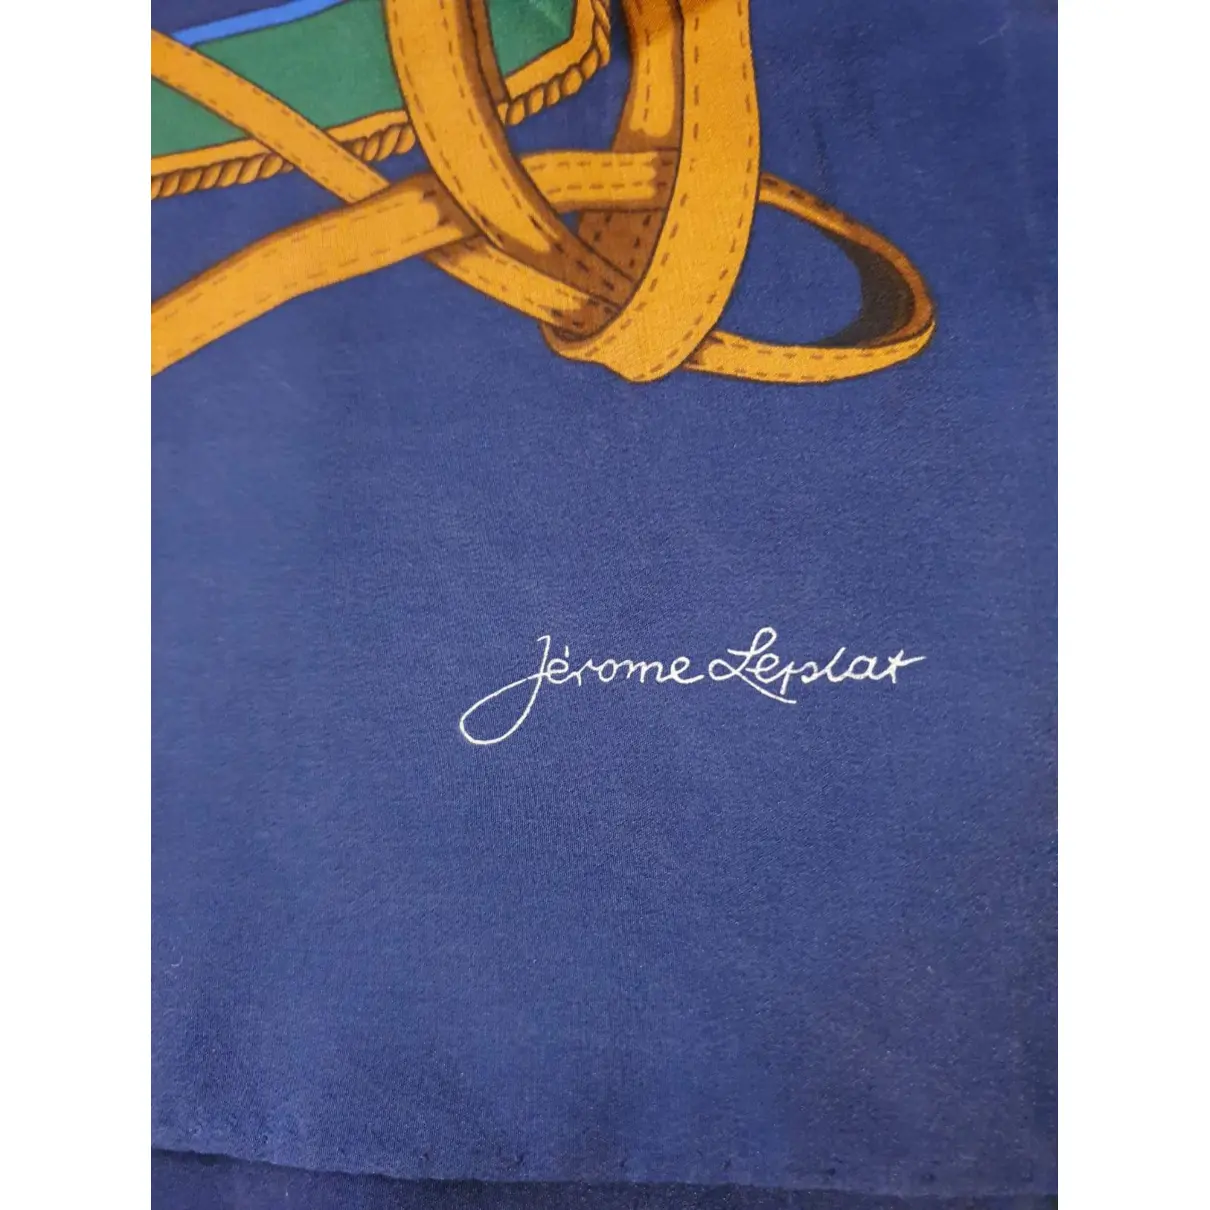 Buy Jerome Leplat Silk scarf online - Vintage